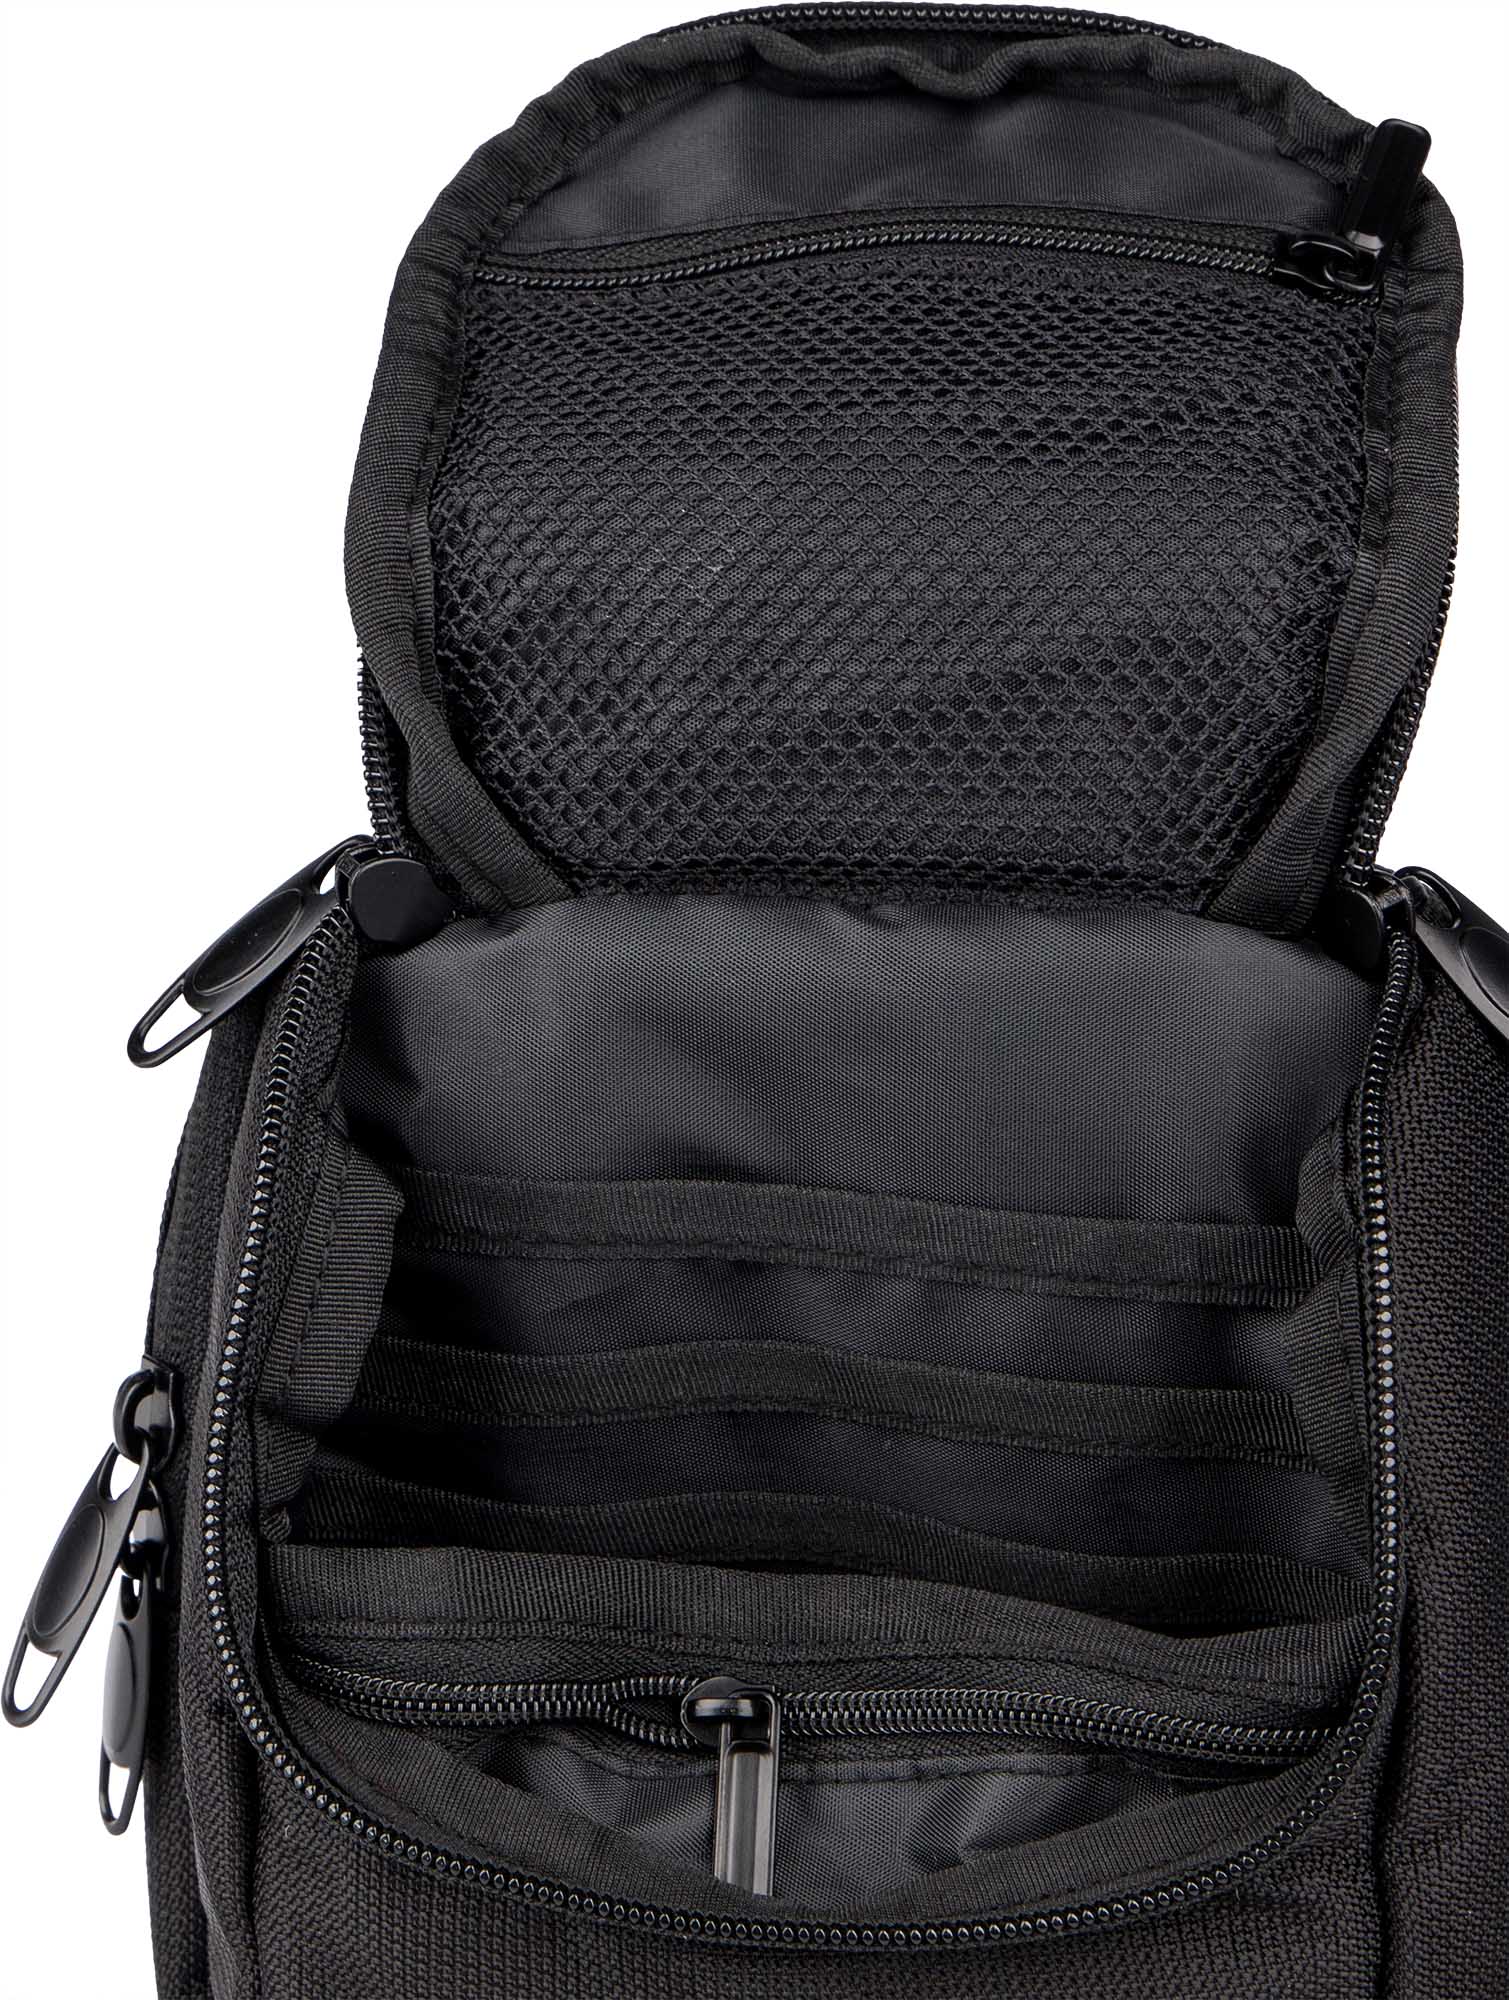 005 black - Travel document bag